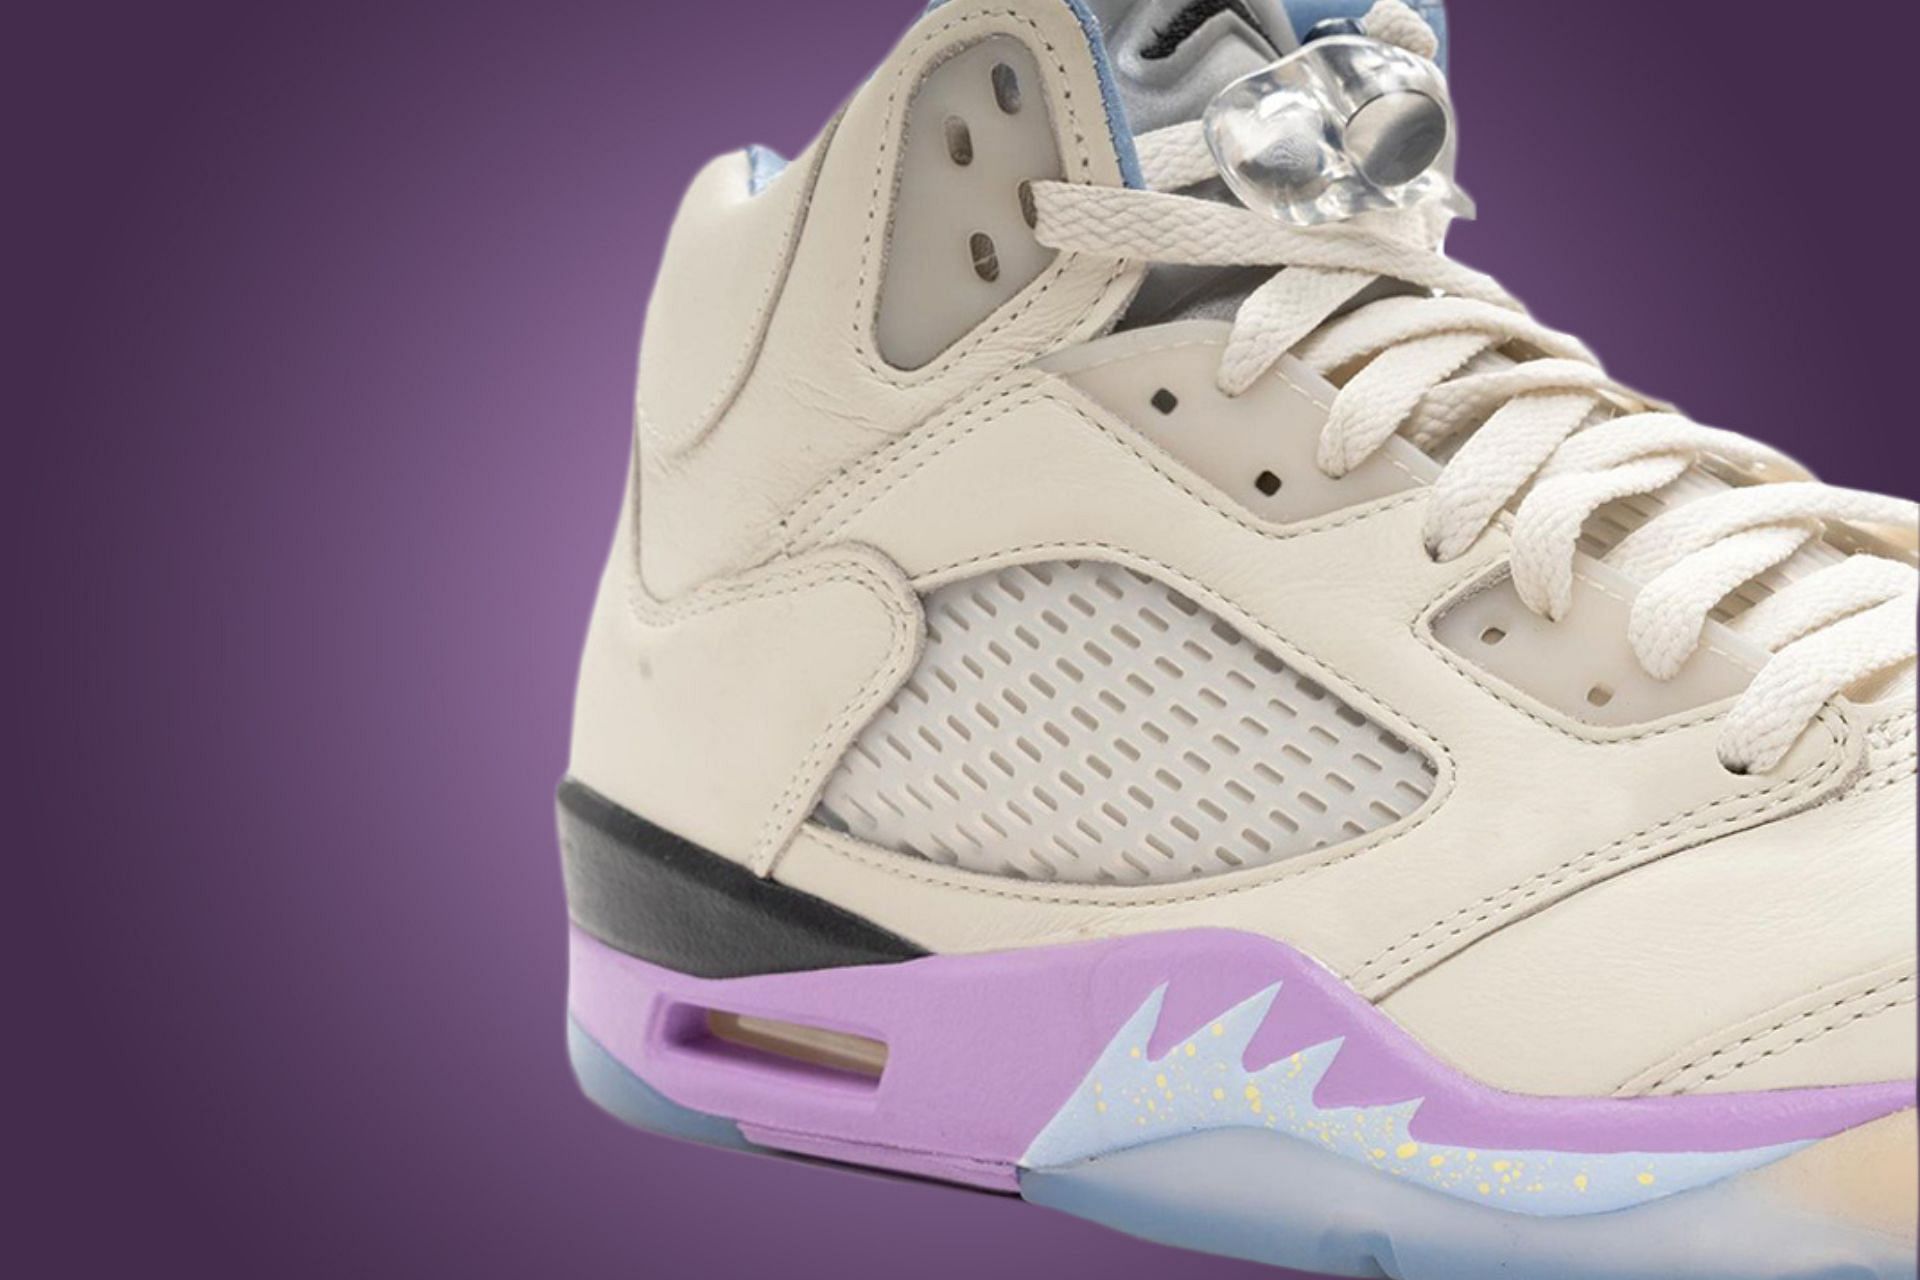 DJ Khaled x Air Jordan 5 Sail Drops On November 28th - Sneaker News